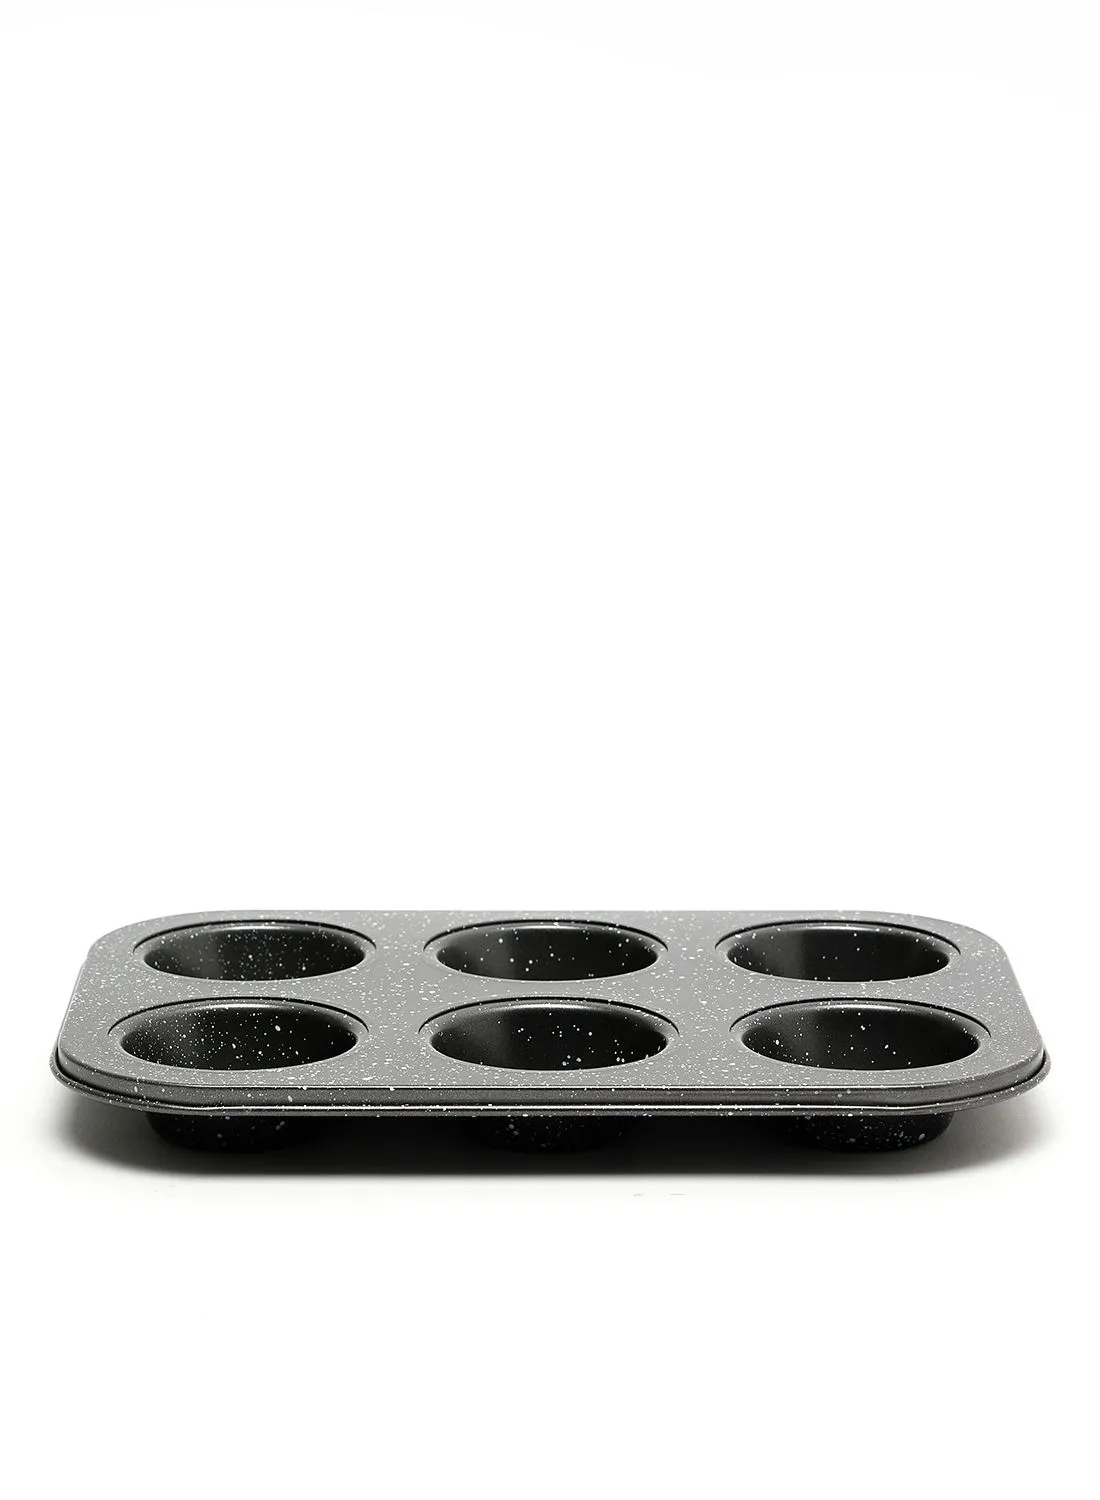 noon east Oven Pan - Made Of Carbon Steel - Cupcake Tray - Baking Pan - Oven Trays - Cake Tray - Oven Pan - Granite Dark Grey